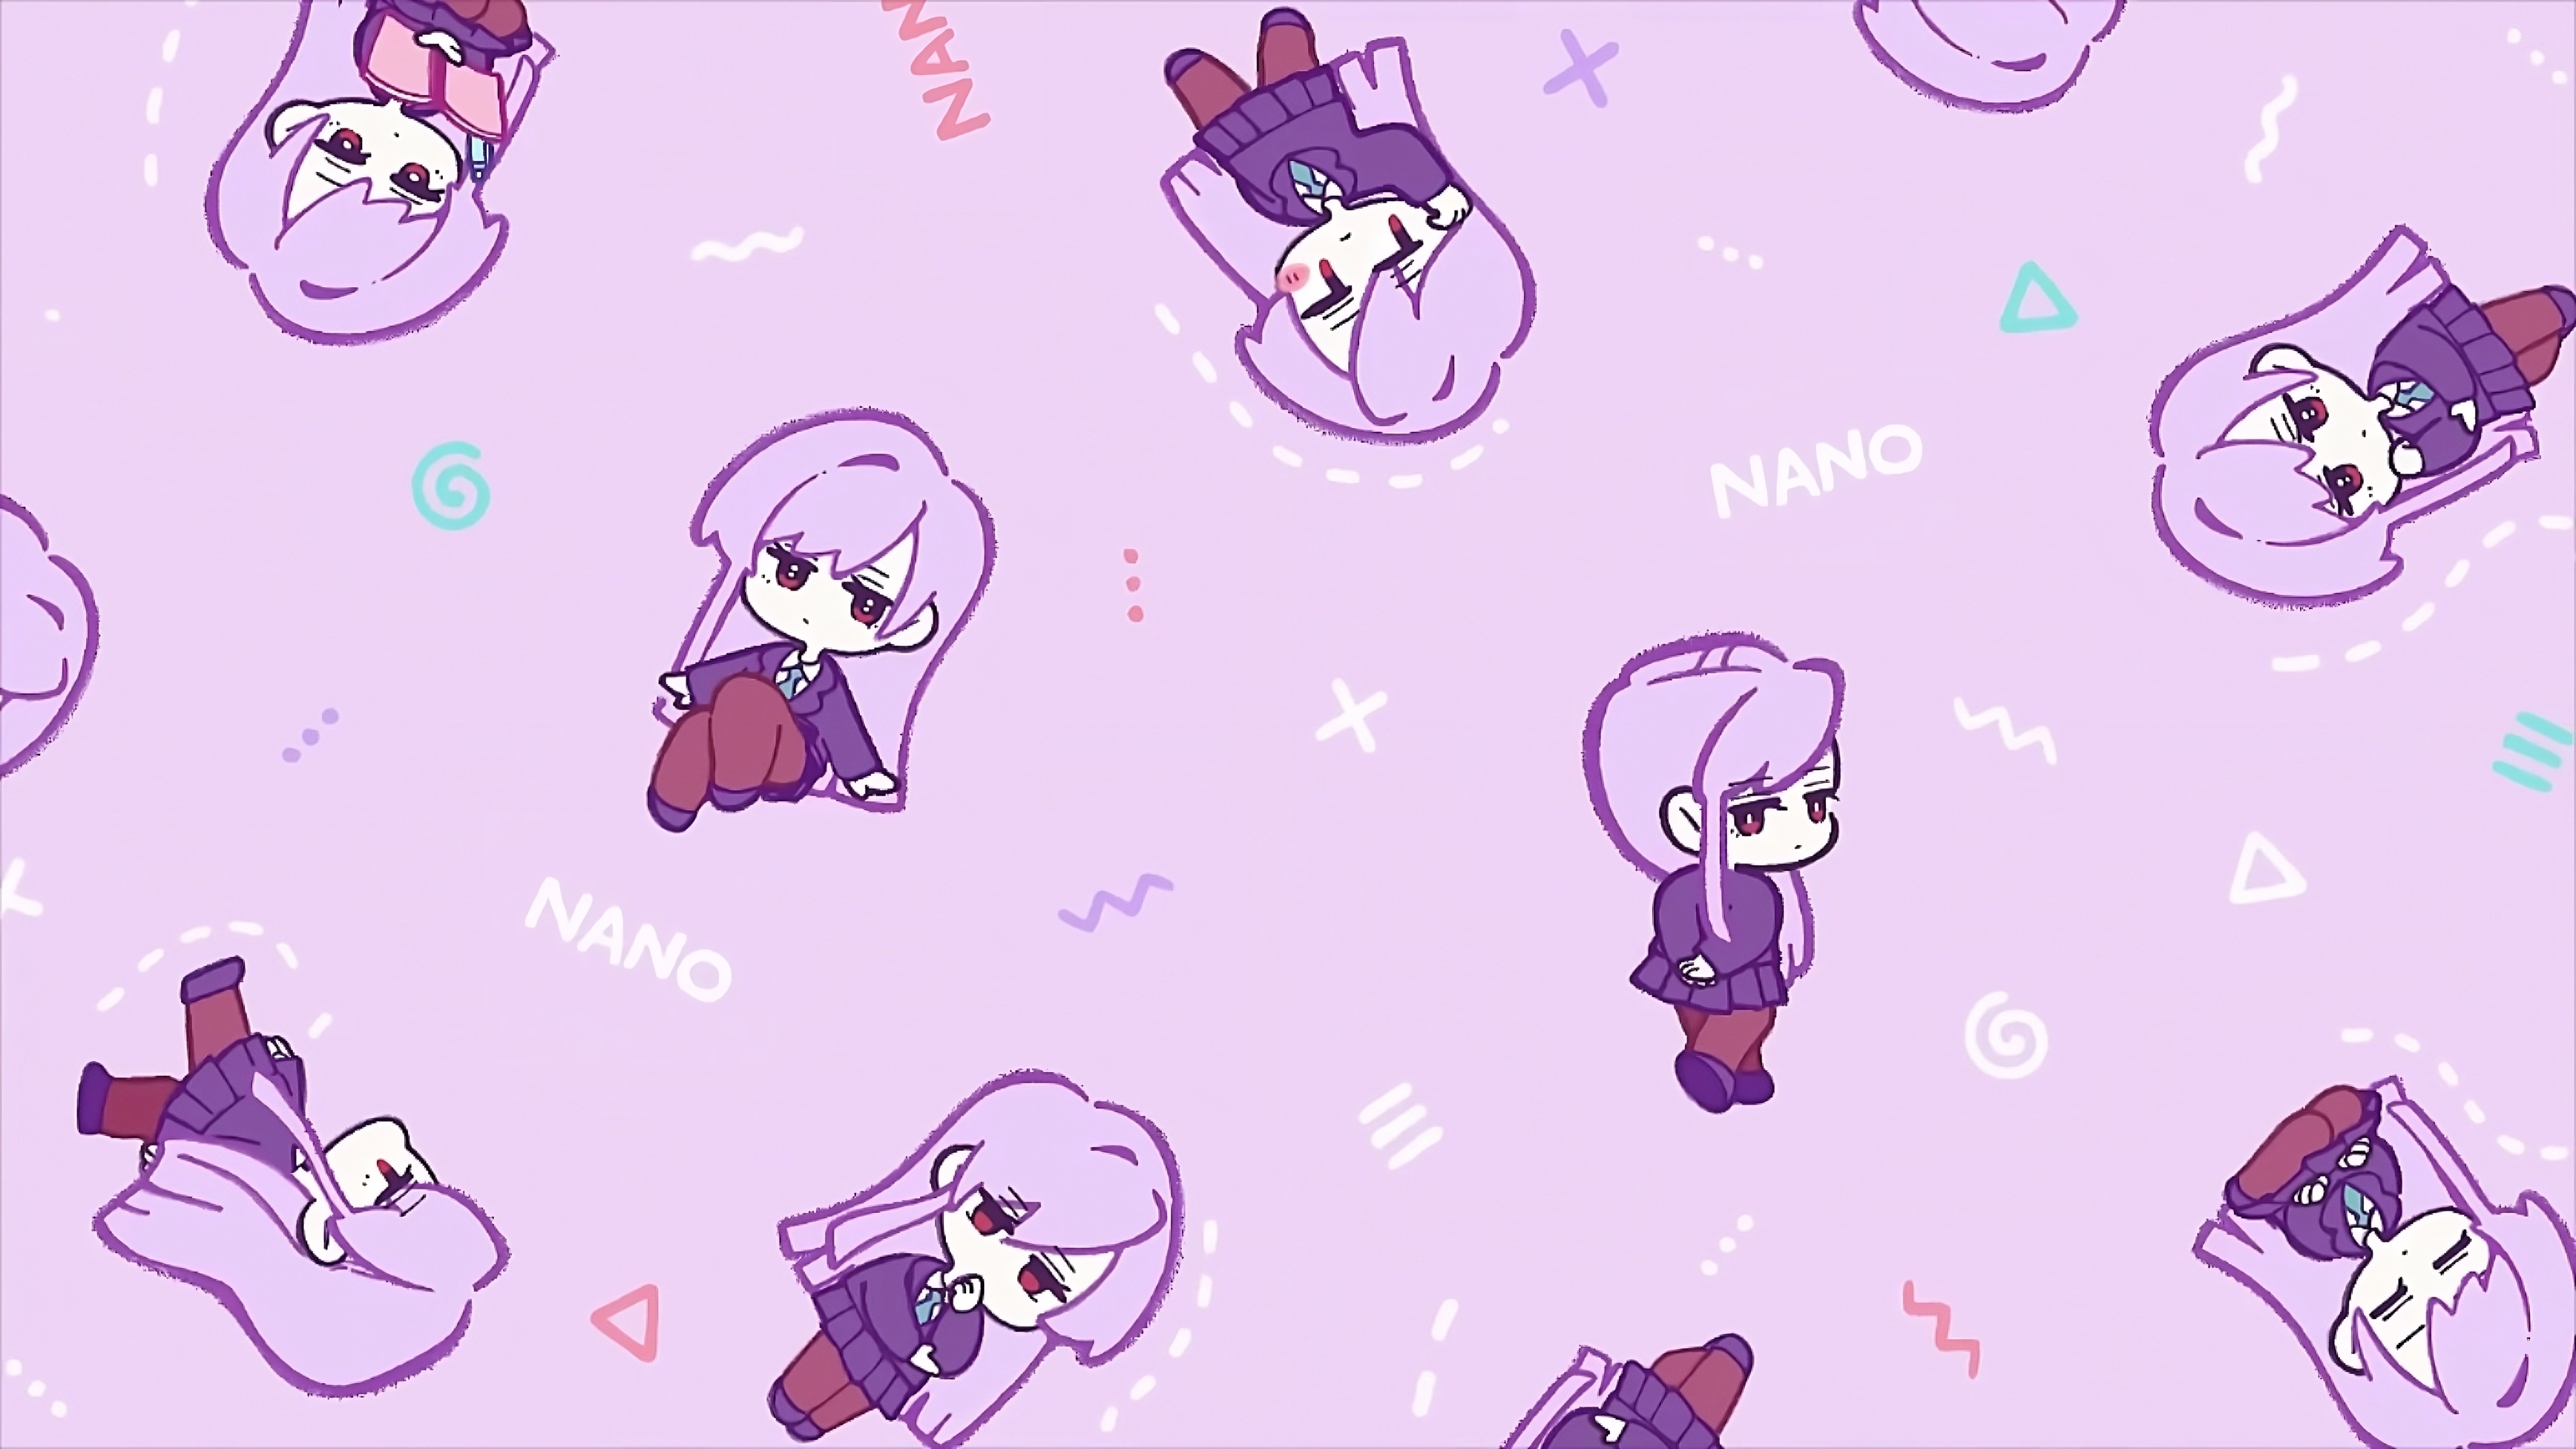 100+] Cute Kawaii Anime Girl Wallpapers